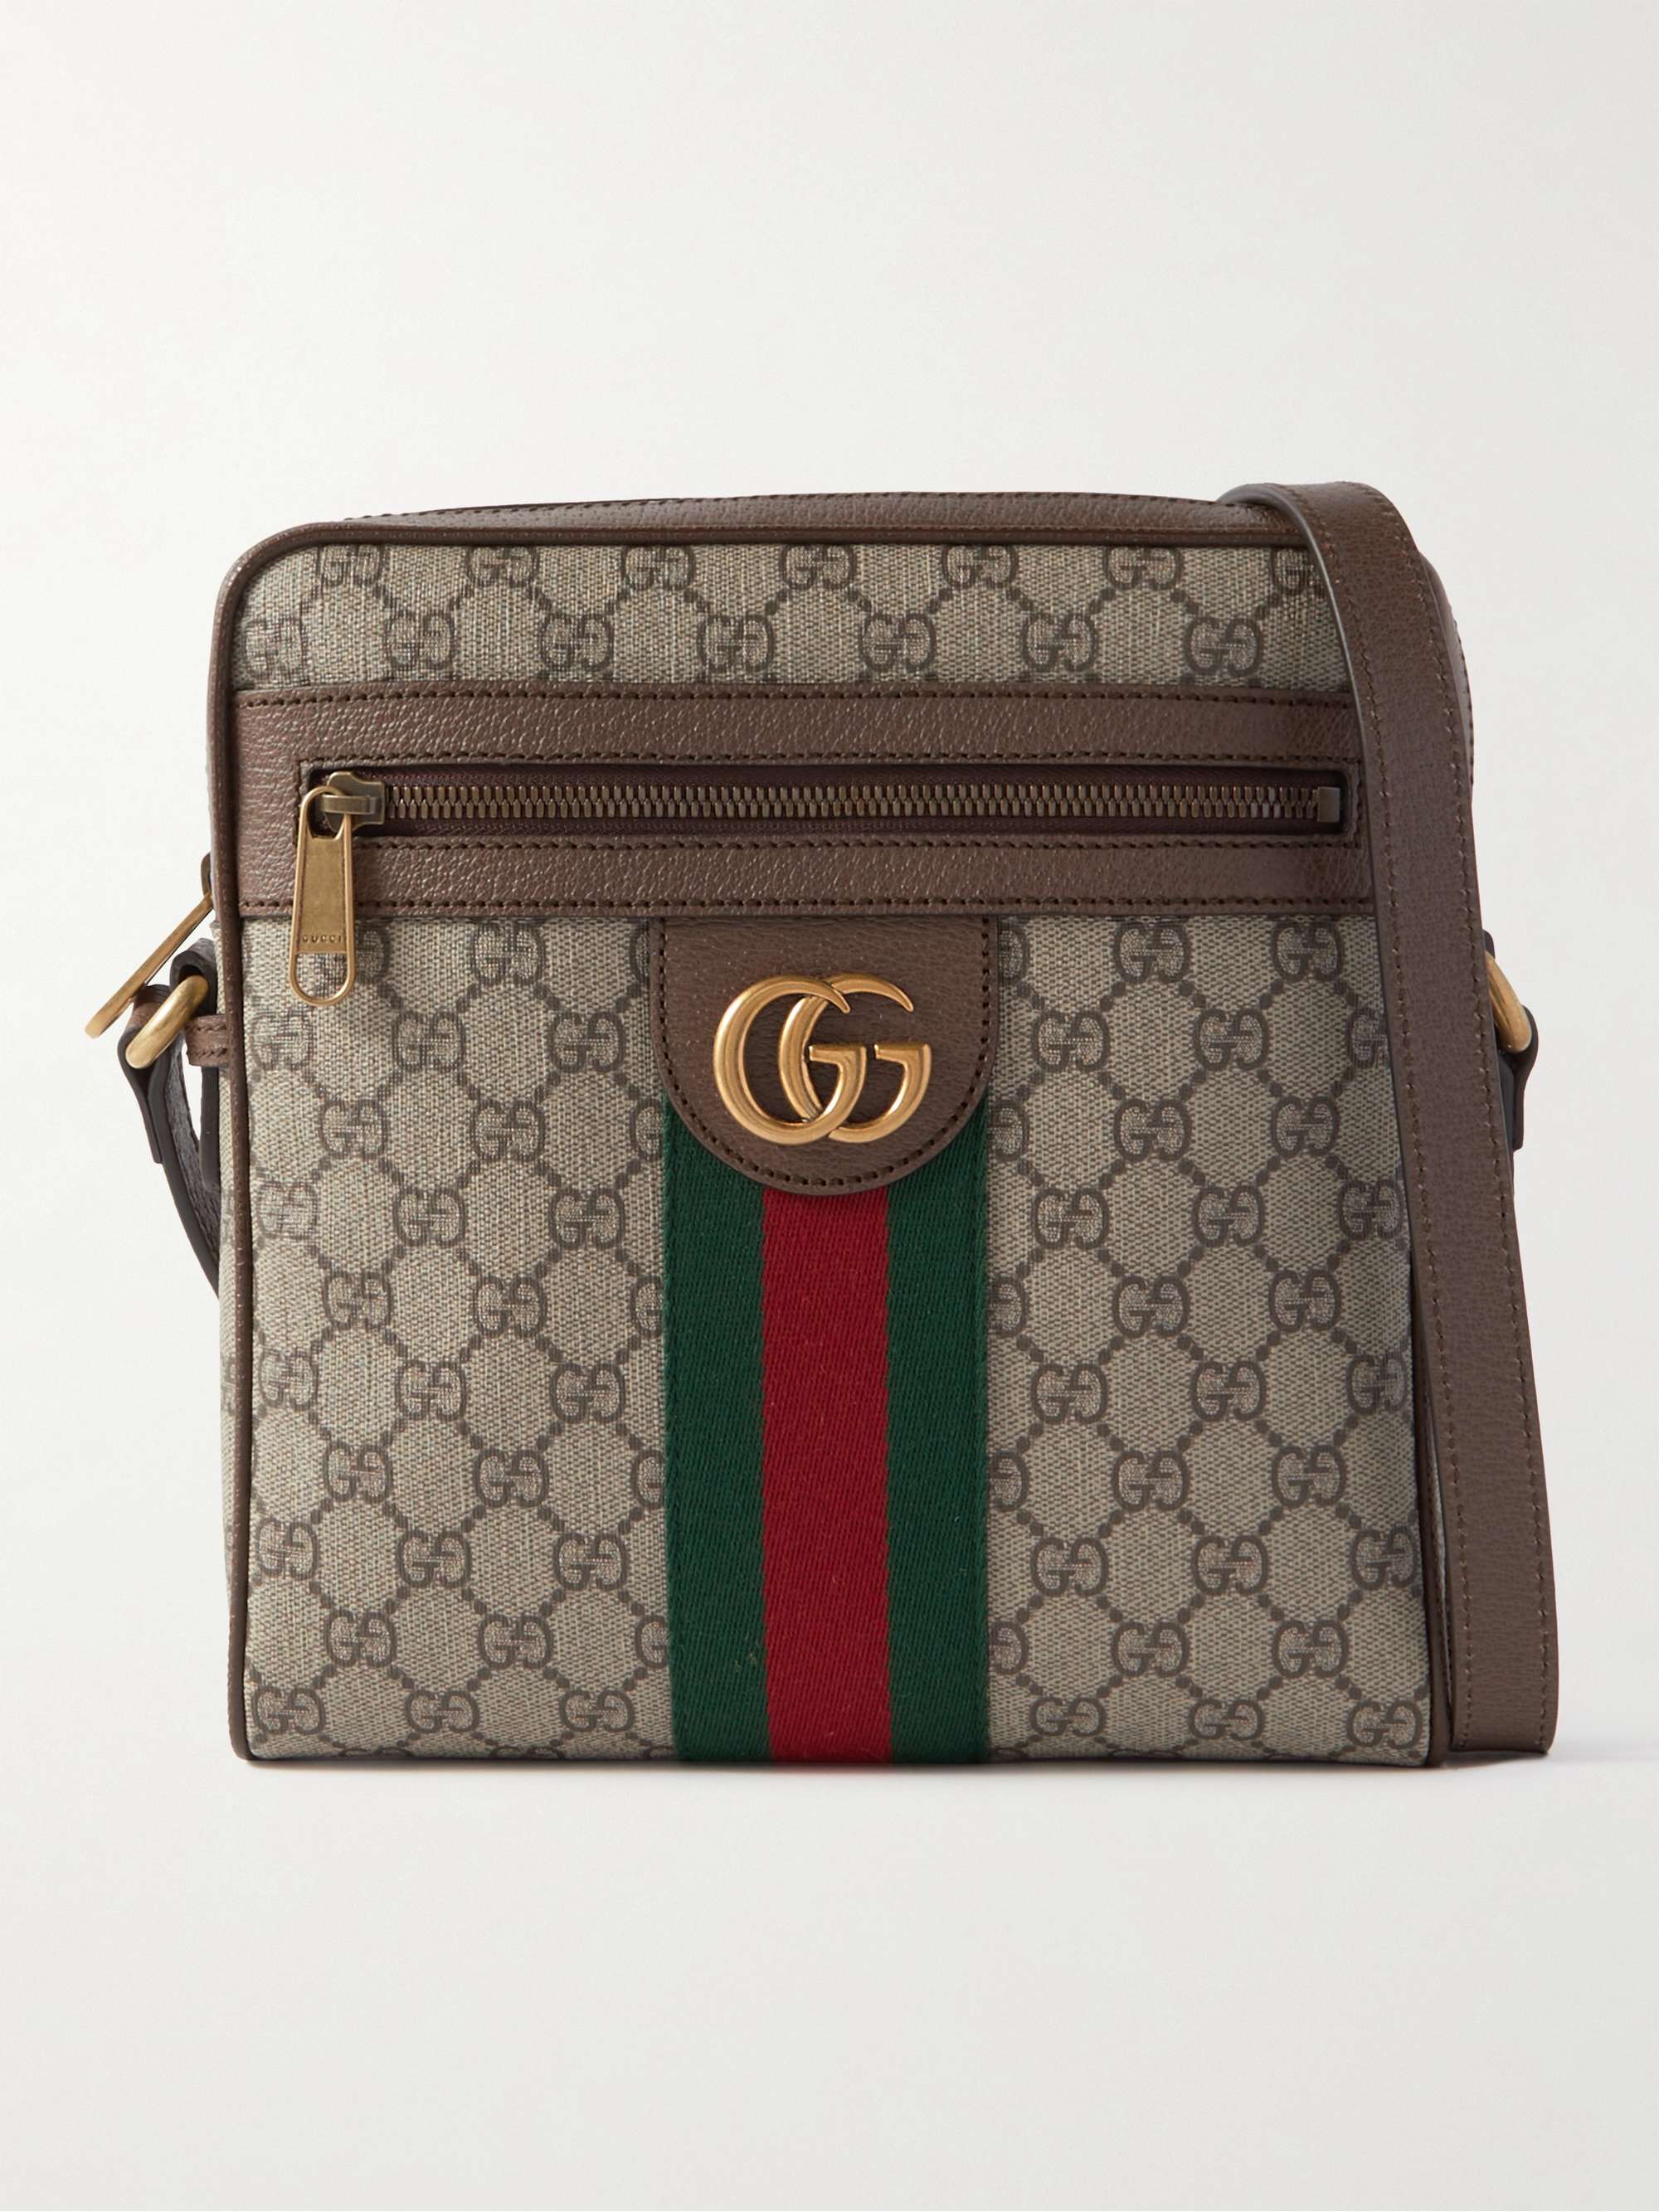 Gucci Messenger Bags For Women